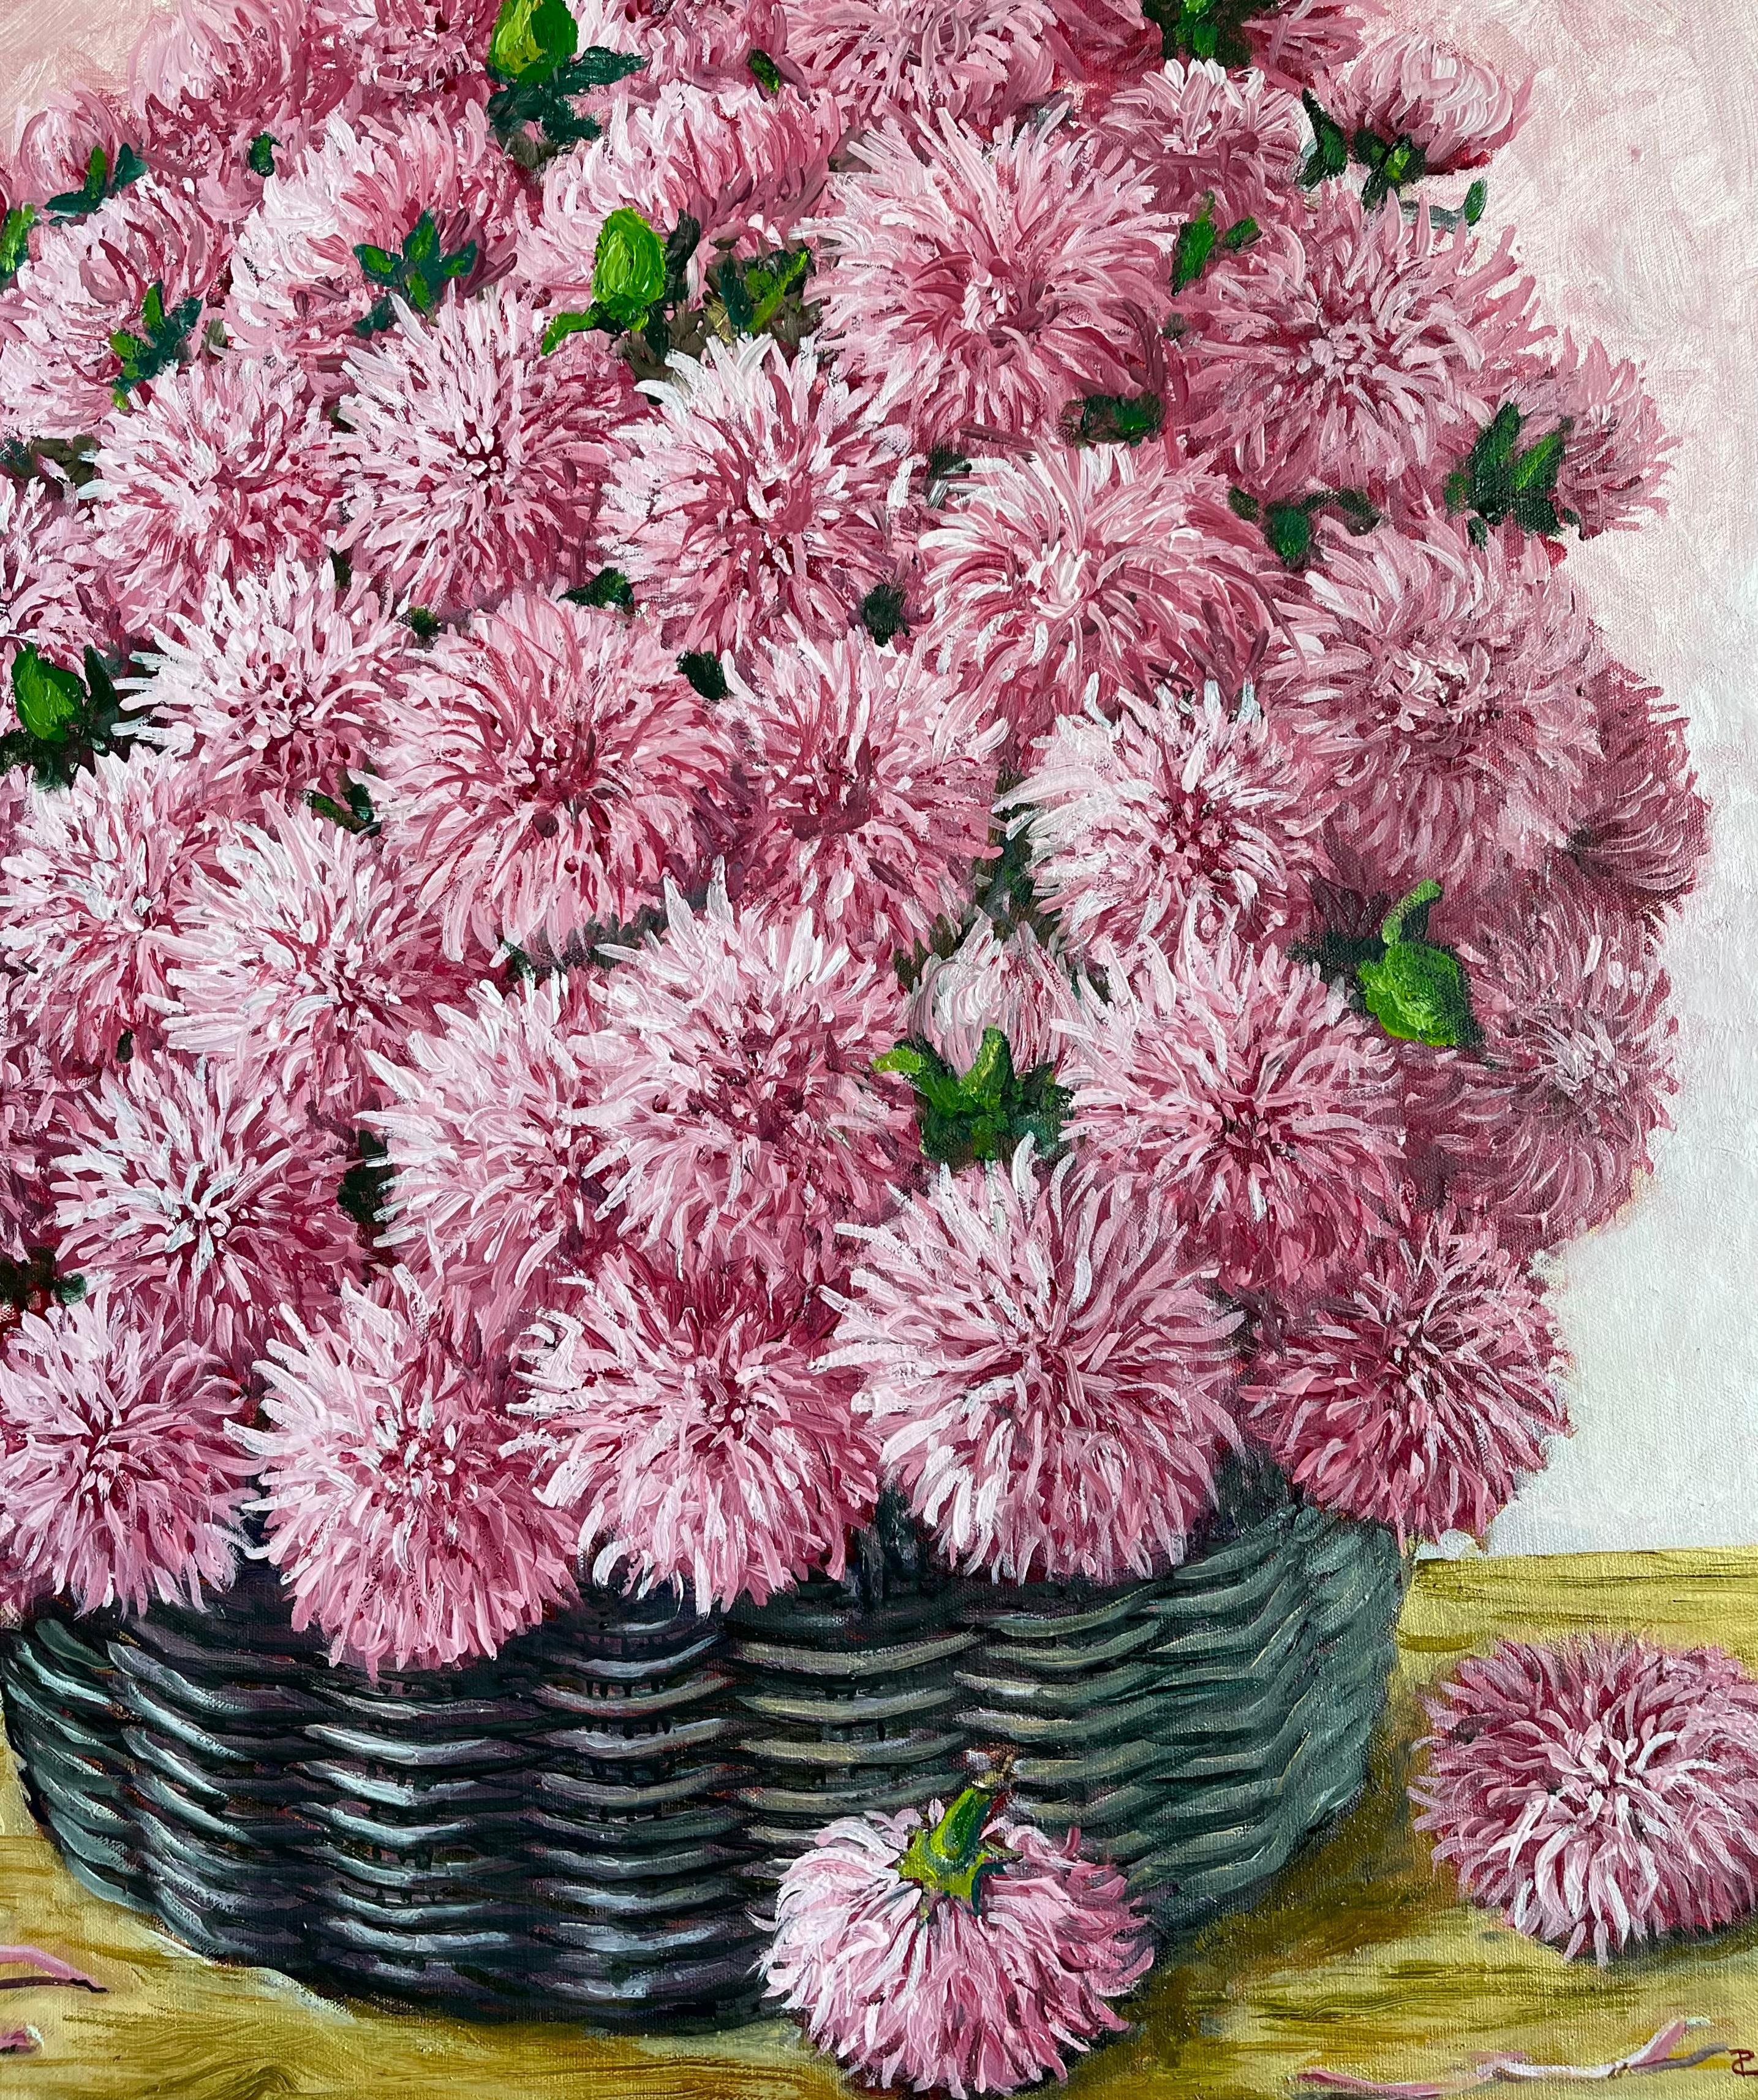  Rosa Chrysanthemen im Korb (Impressionismus), Painting, von Rafael Saldarriaga